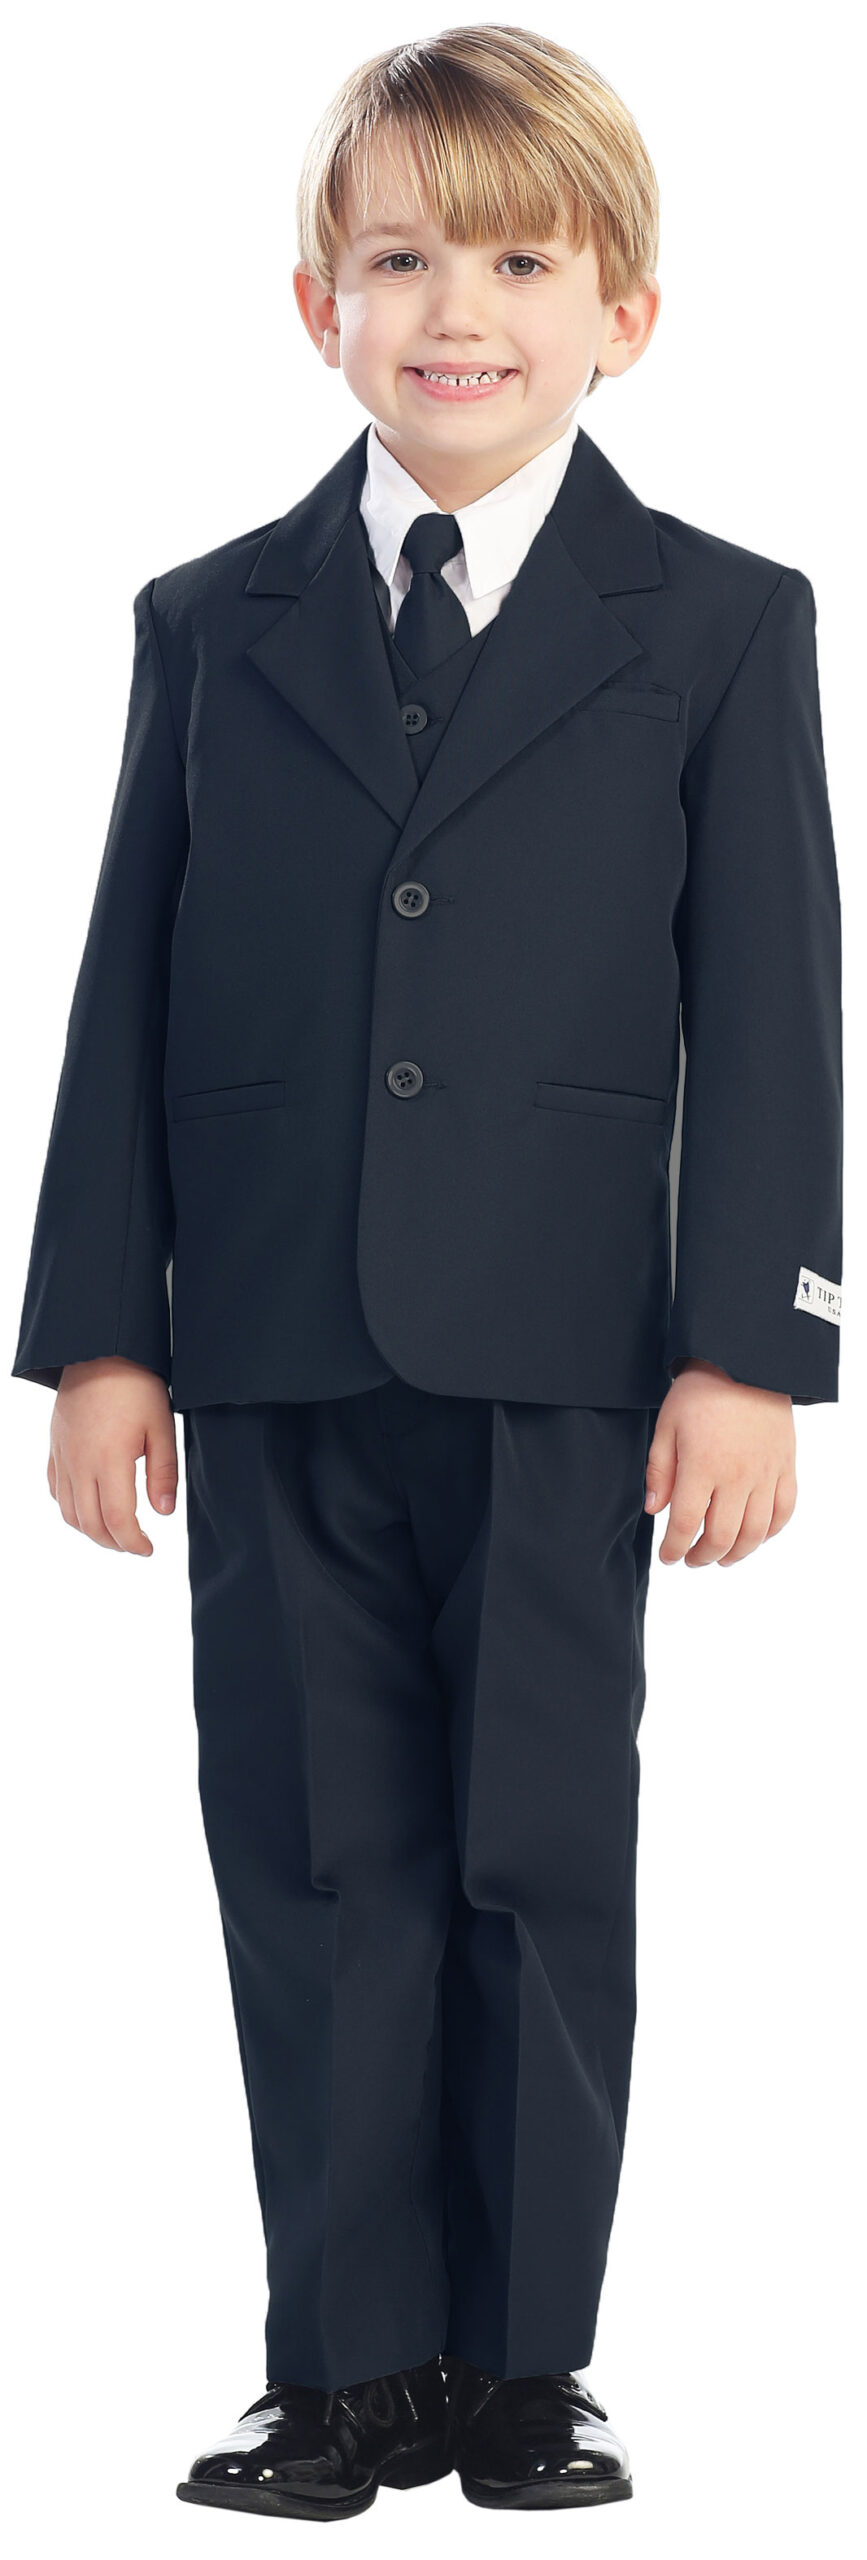 Avery Hill 5-Piece Boy's 2-Button Dress Suit Full-Back Vest - Navy Blue XL (18 - 24 Months)